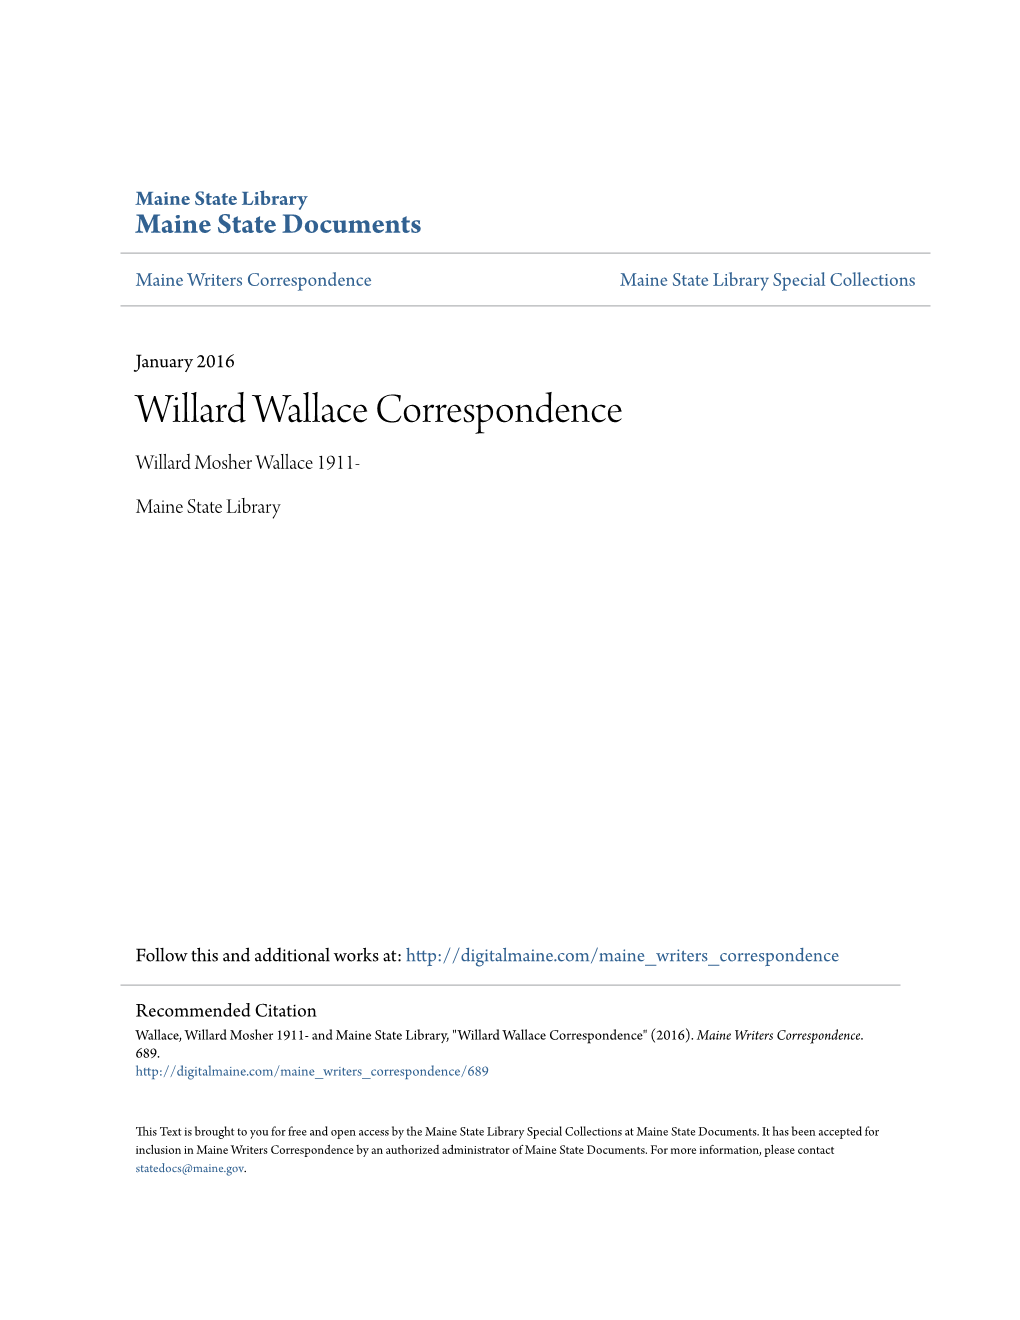 Willard Wallace Correspondence Willard Mosher Wallace 1911